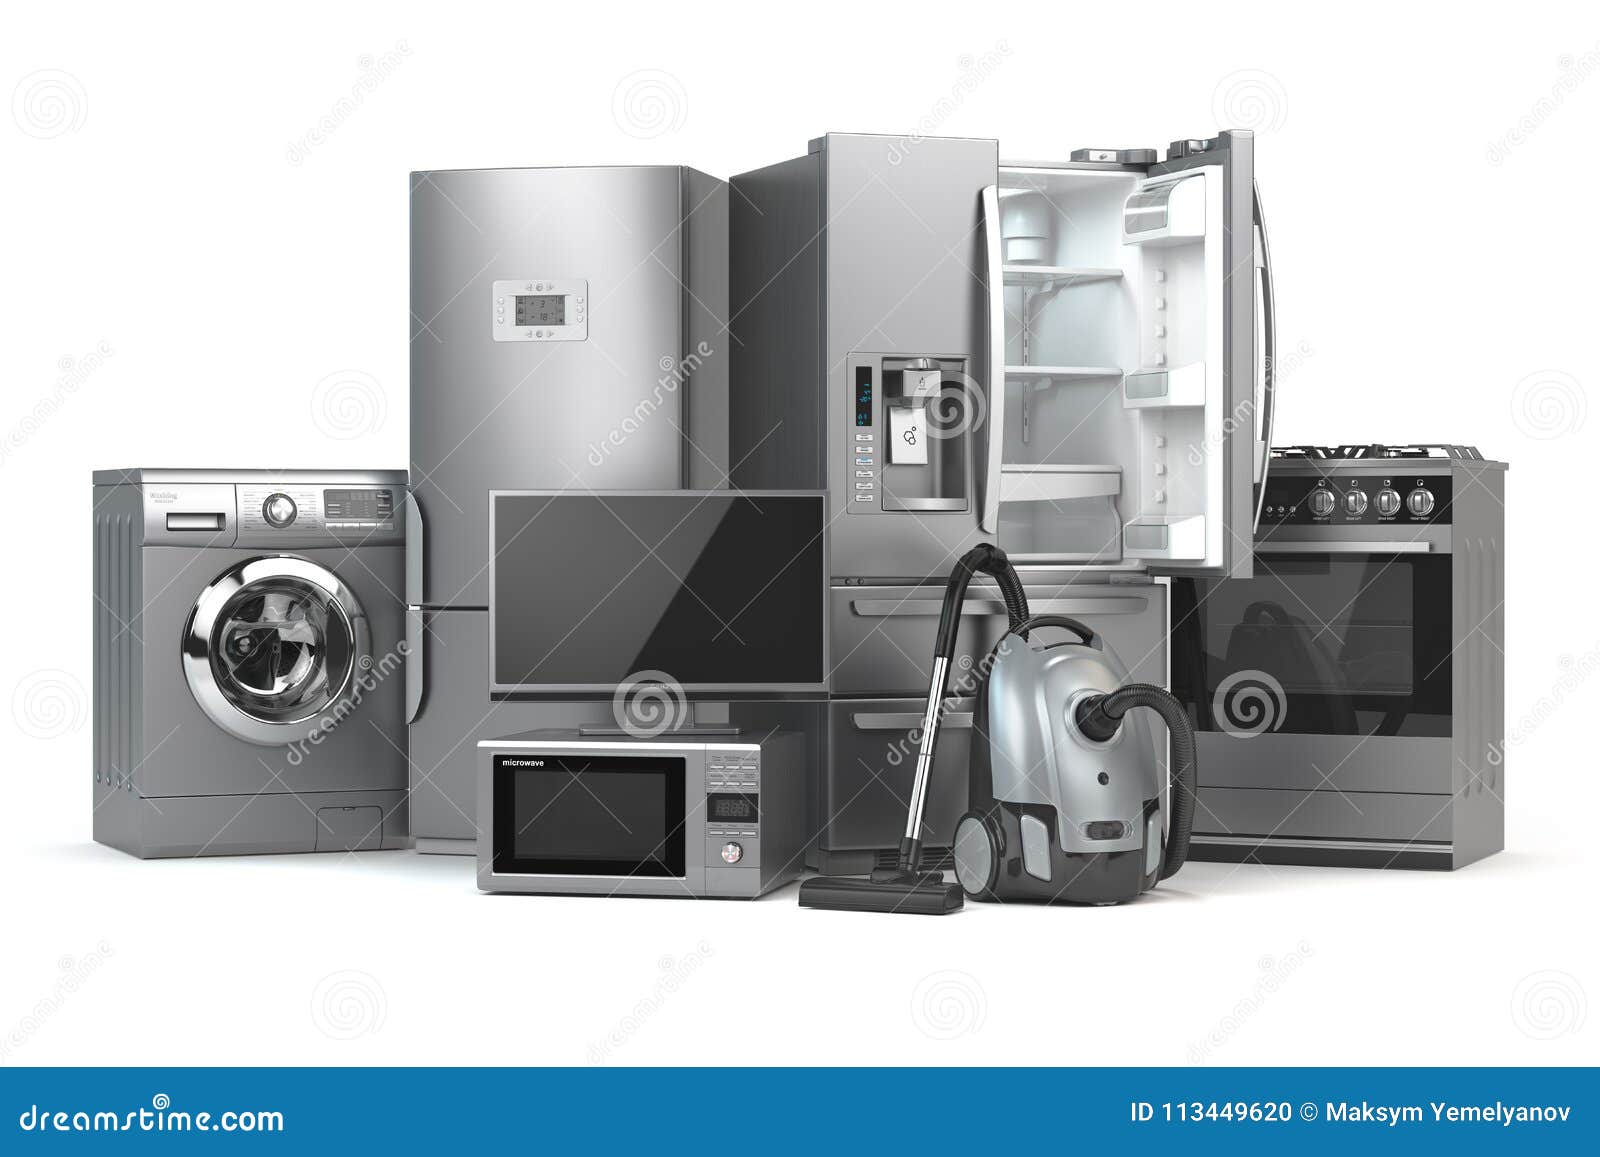 home appliances. set of household kitchen technics  on w